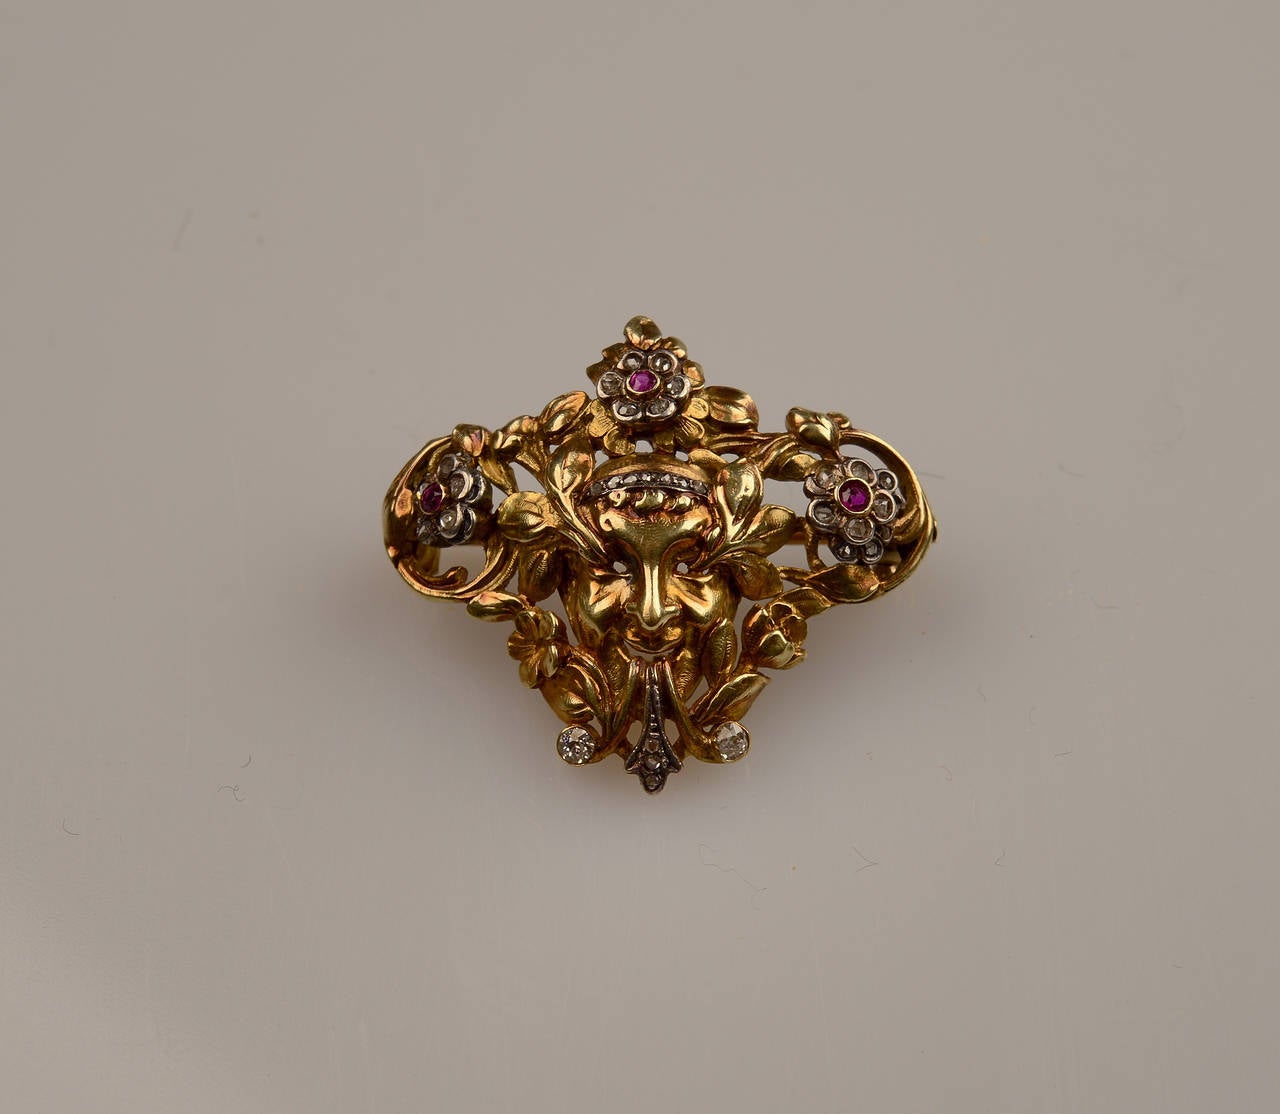 Rare Frederic Boucheron gold, diamonds and pink sapphire brooch, circa 1880. Hallmark and signature F.Boucheron.